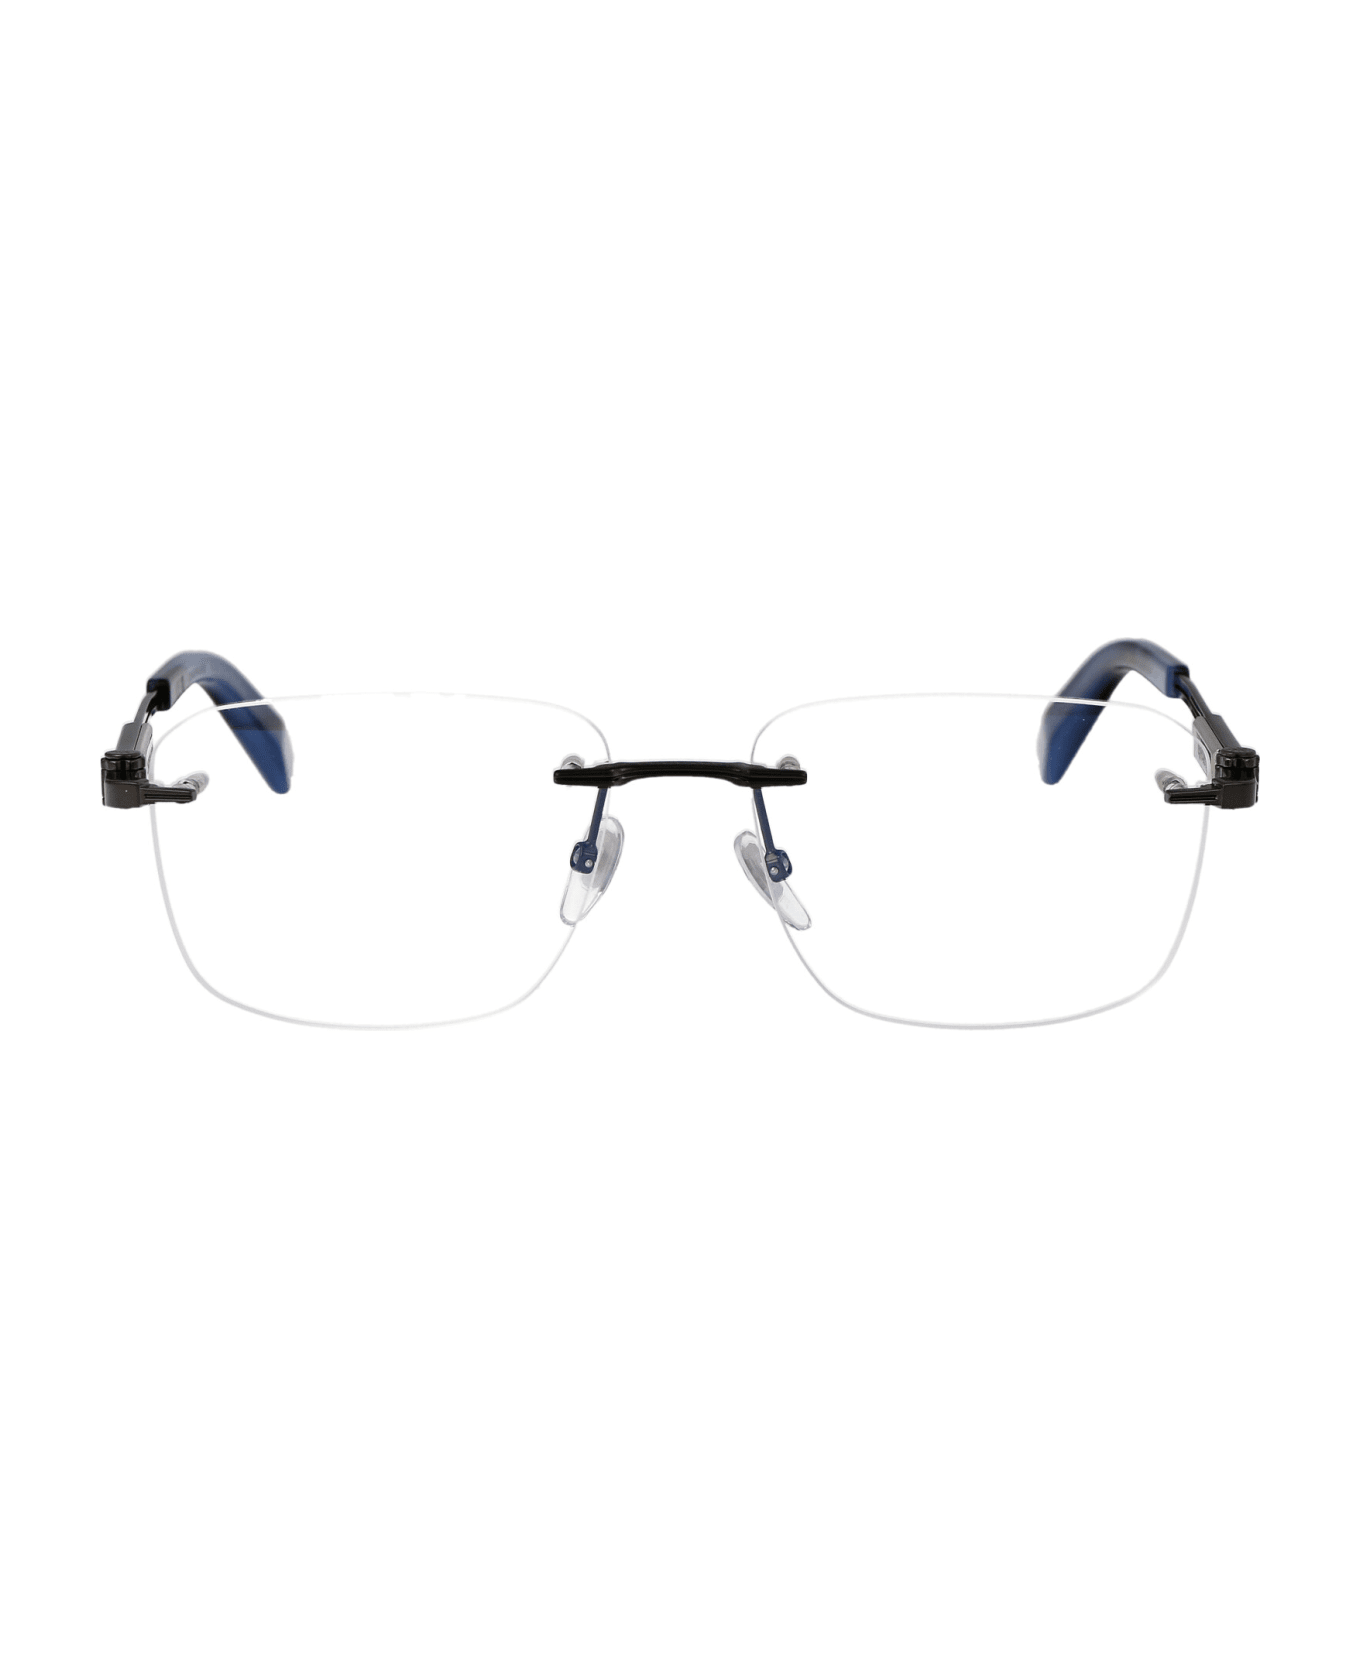 Chopard Vchg86 Glasses - 0568 BACHELITE LUCIDA TOTALE アイウェア